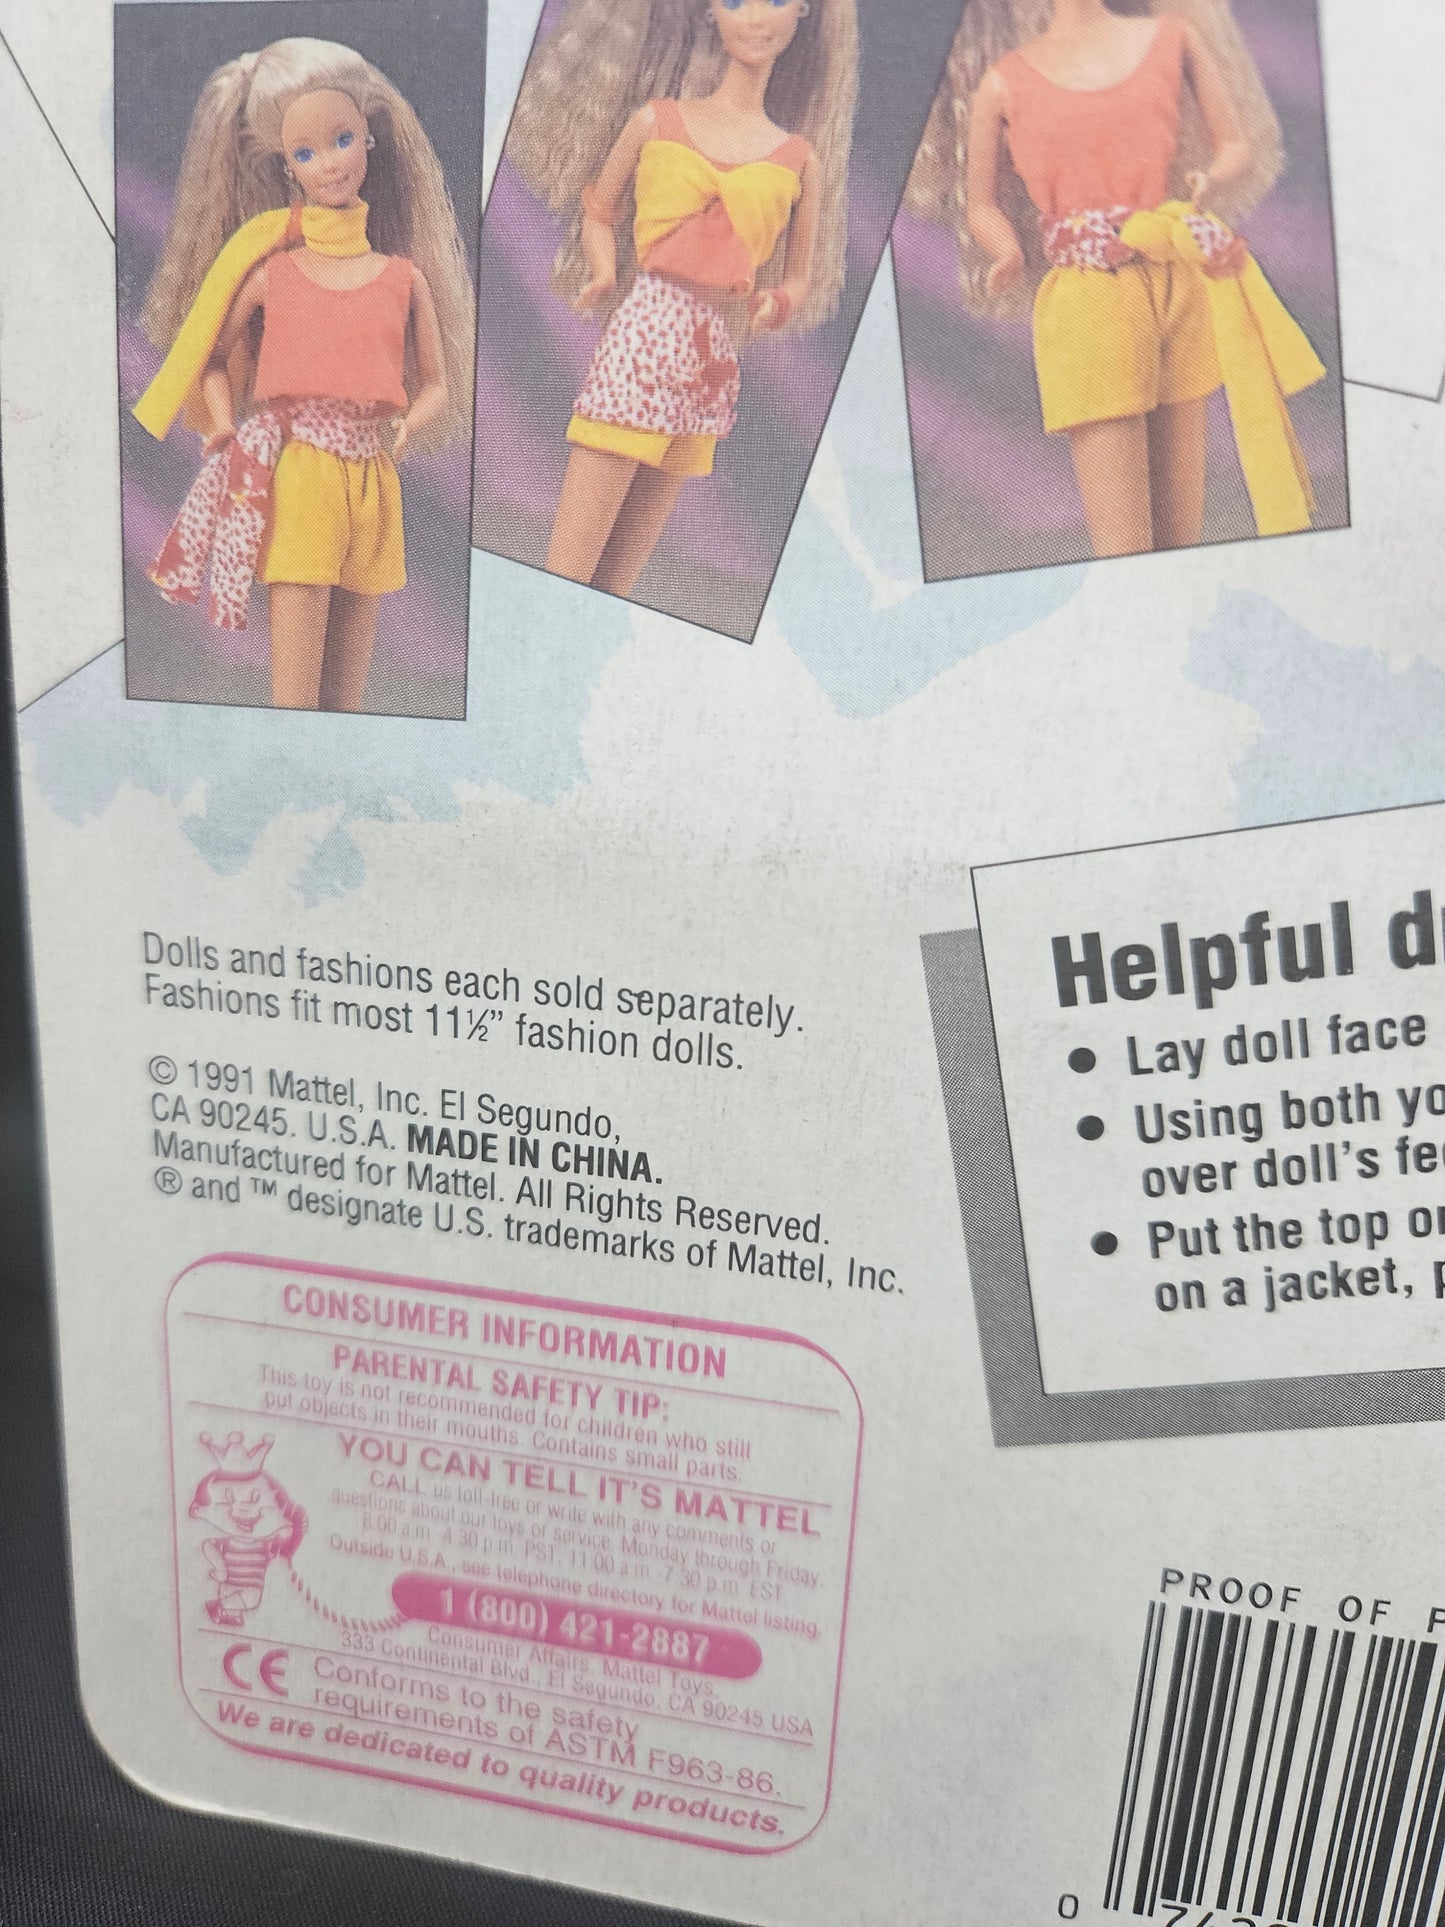 Vintage Barbie Fashion Wraps Mattel 1991